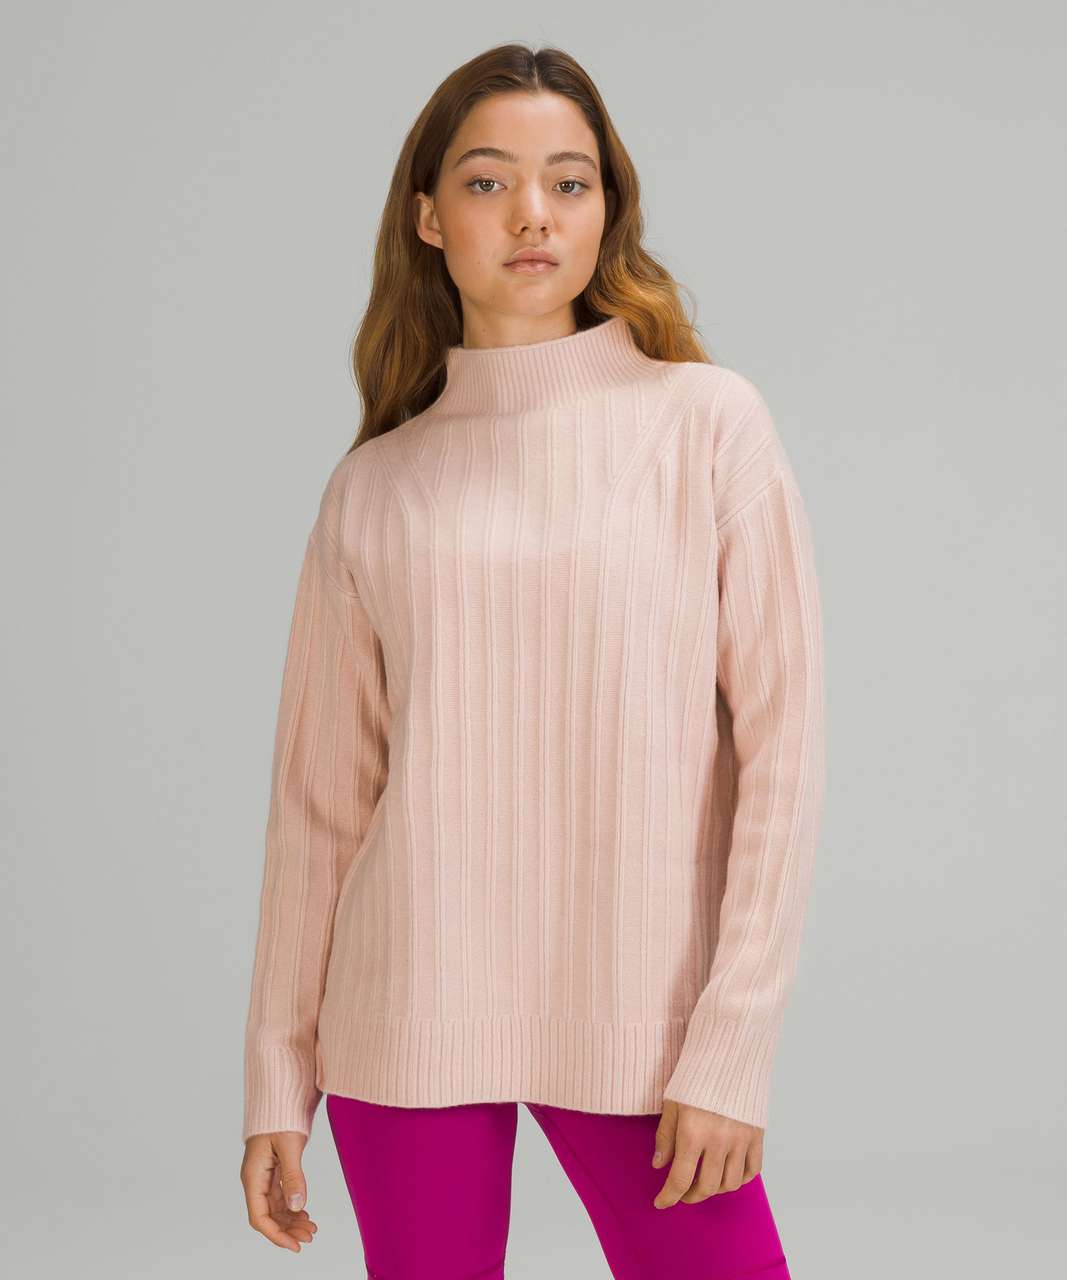 Lululemon Twin Rib Turtleneck Sweater - Feather Pink